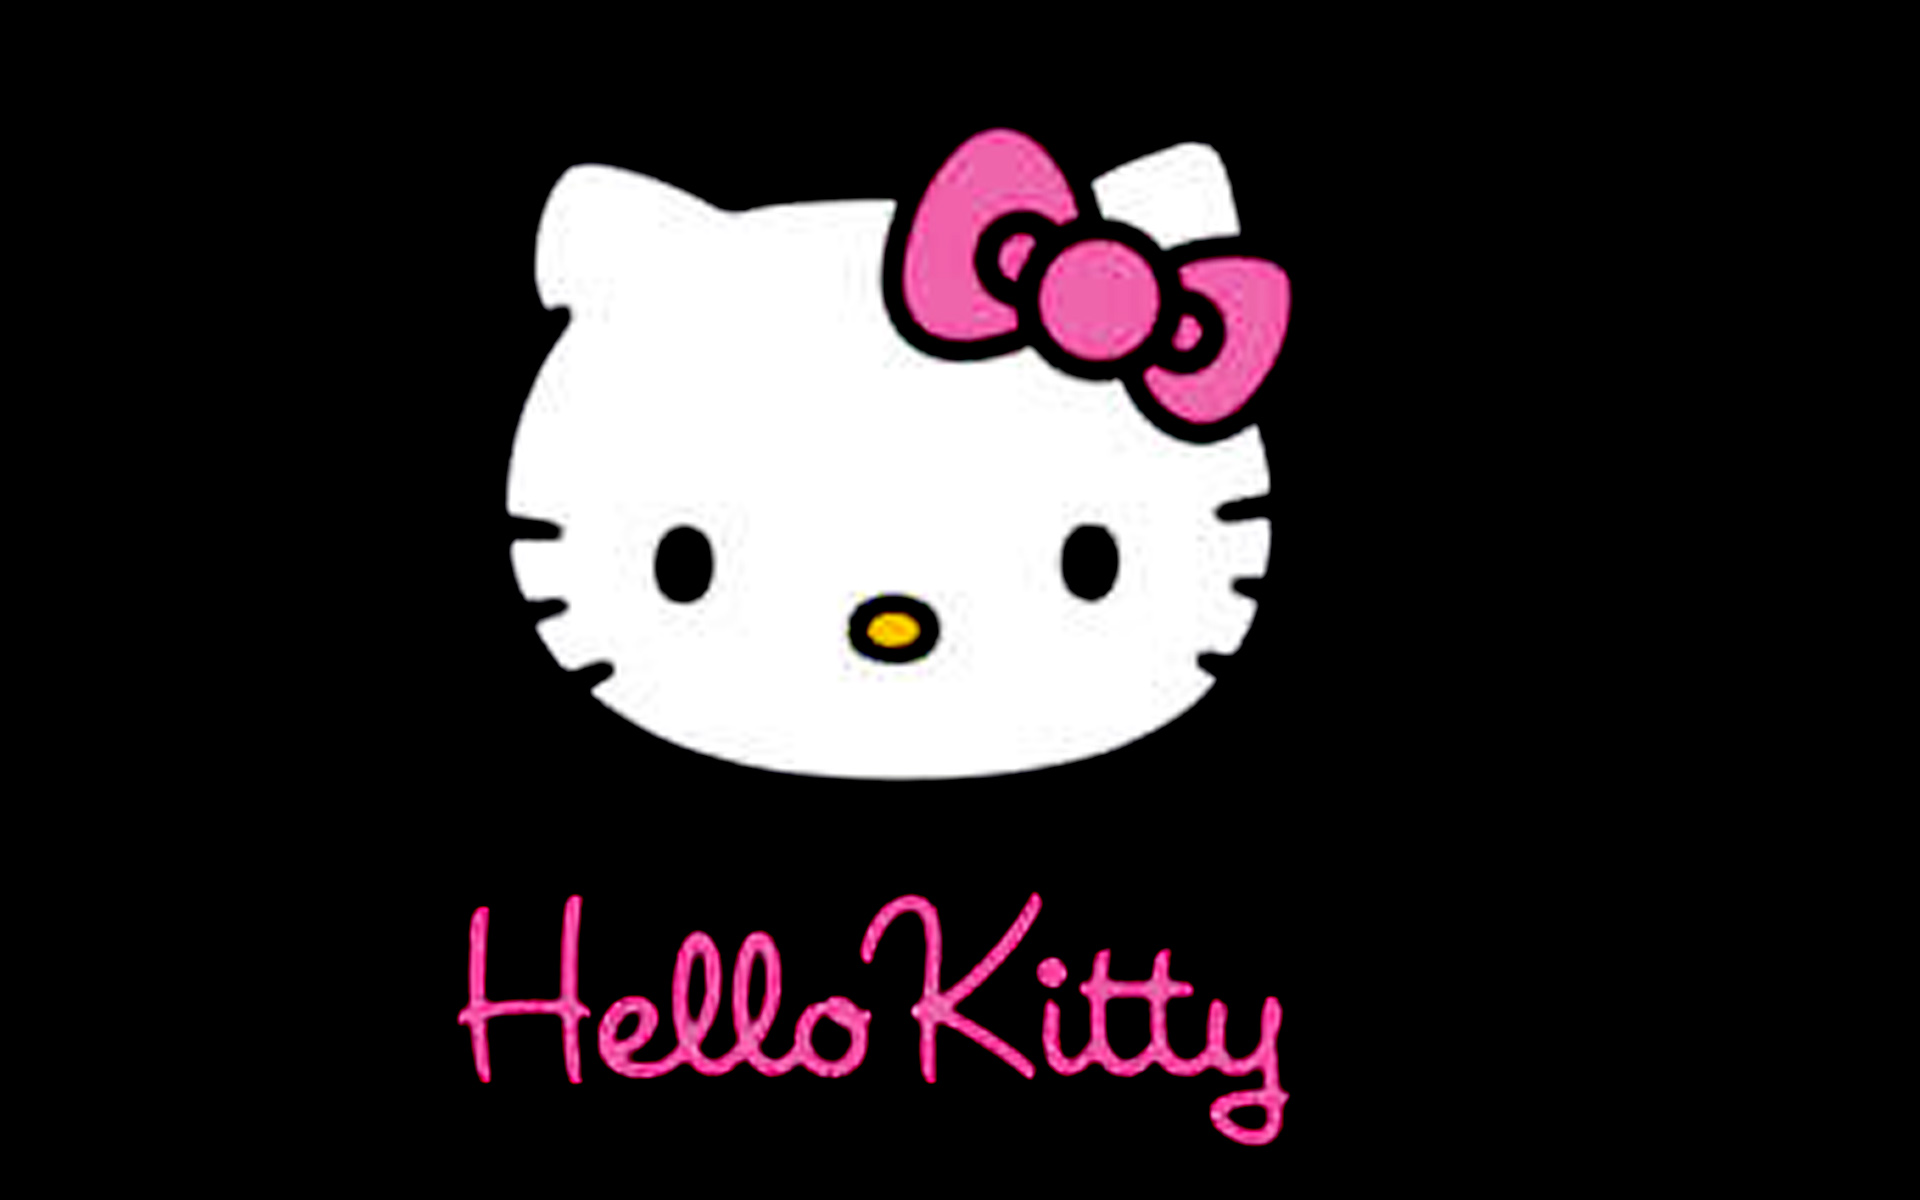 Download Hello Kitty Black Wallpaper 1920x1200 Full HD Wallpapers